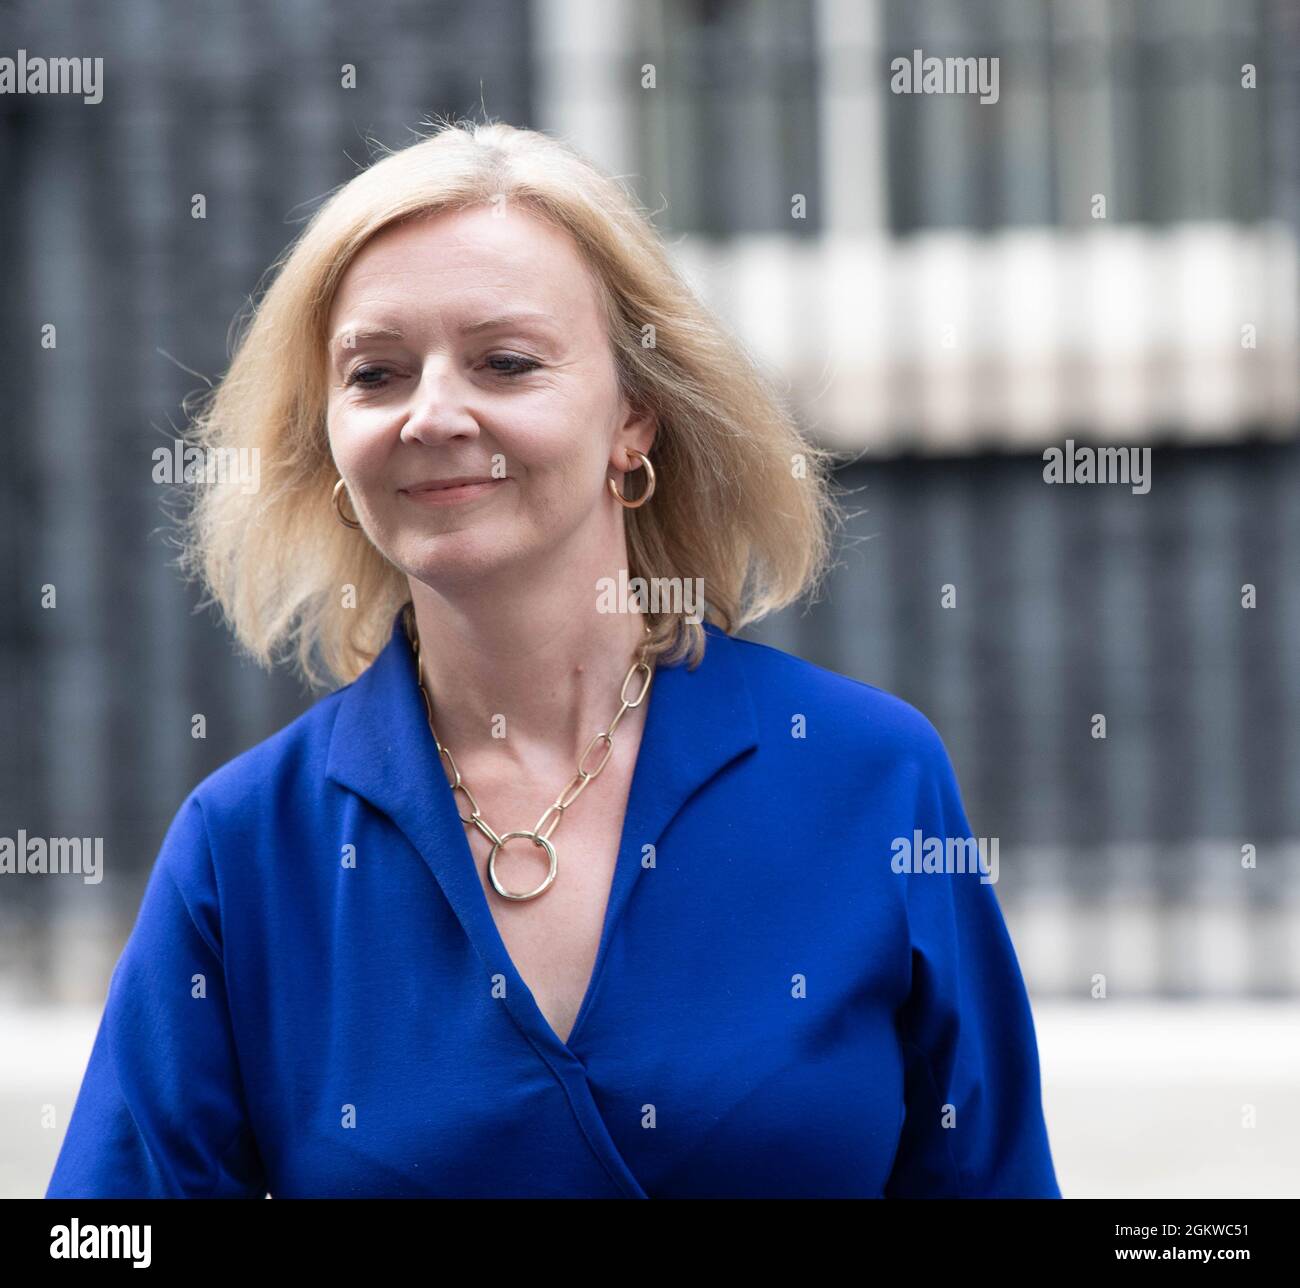 London, UK. 15th Sep, 2021. Cabinet reshuffled Downing Street London Liz Truss new Foreign Secretary Credit: Ian Davidson/Alamy Live News Stock Photo